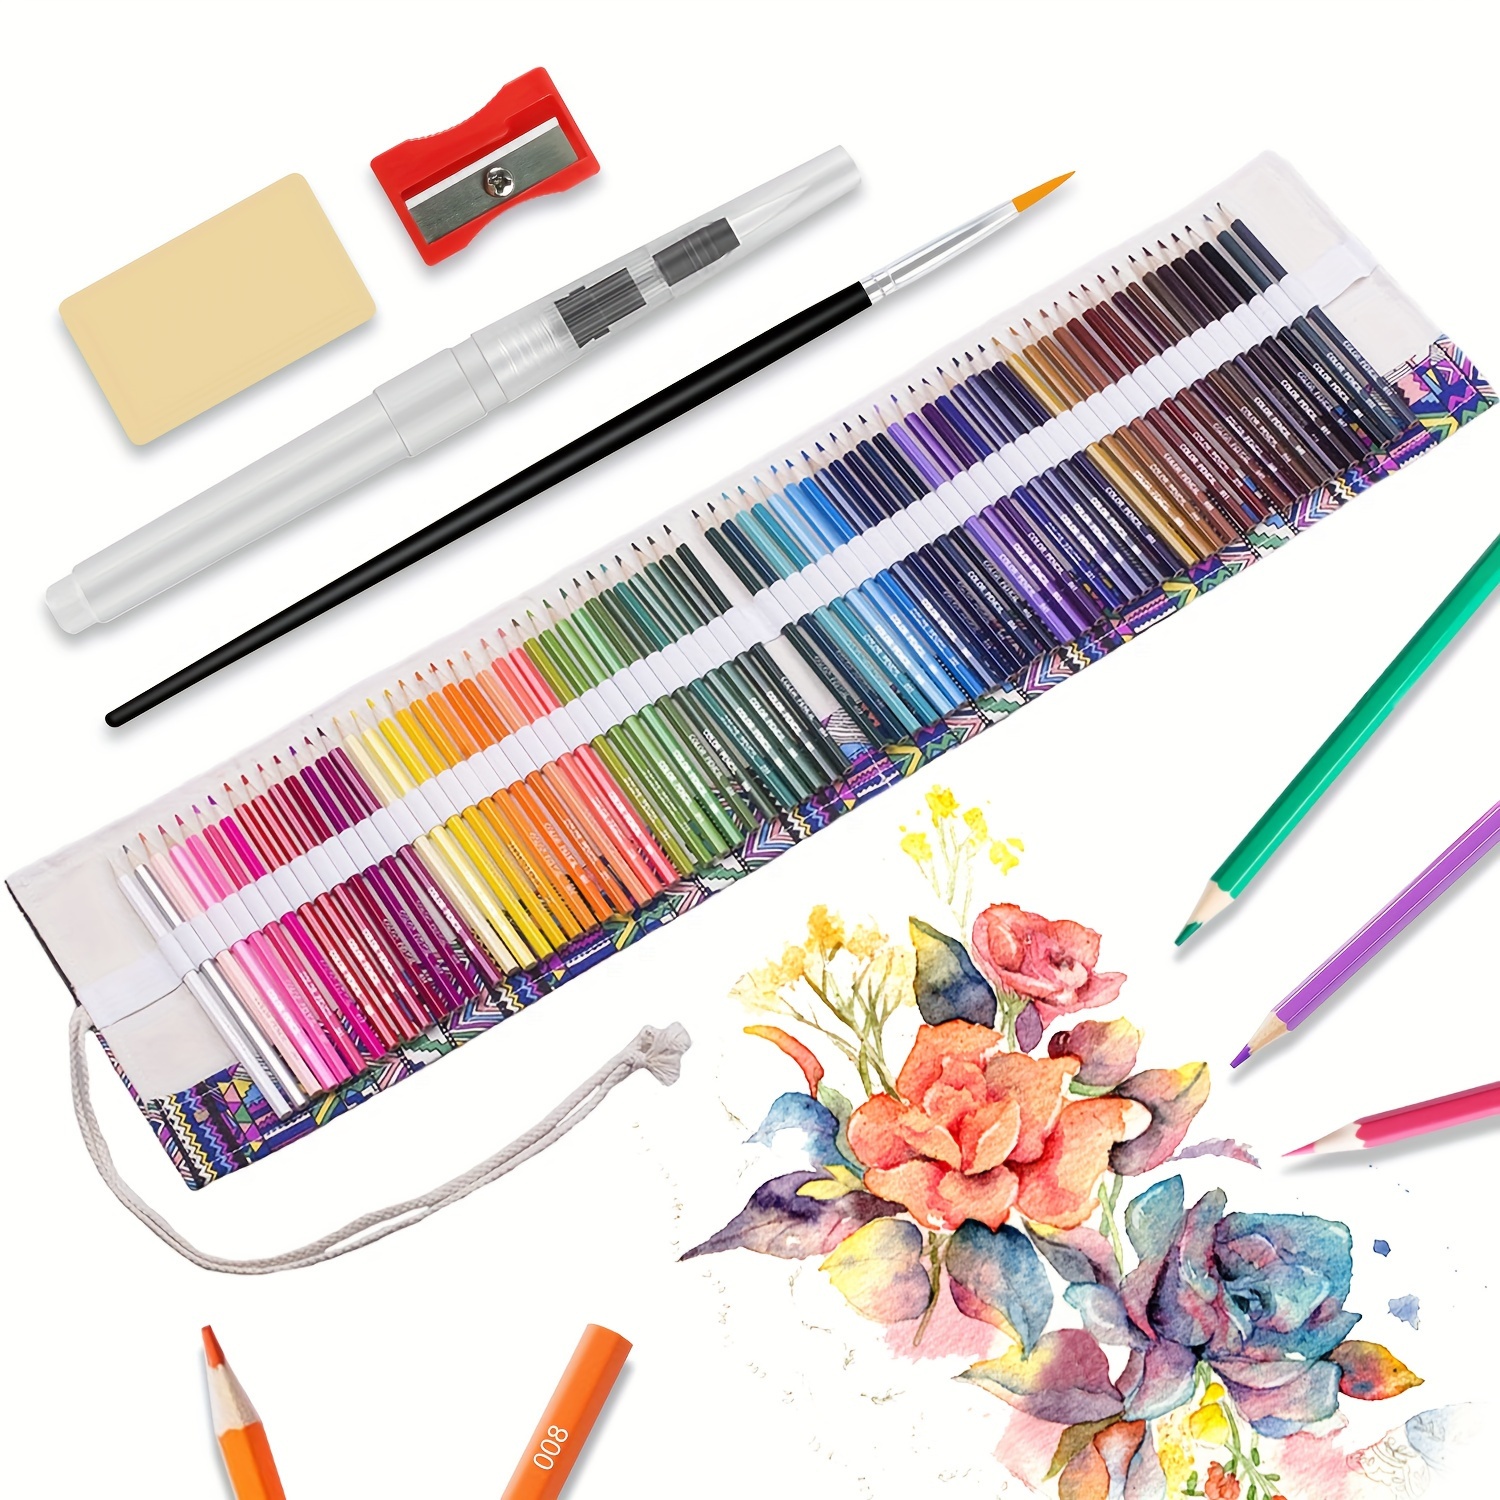 

Ccfoud 72 Color Watercolor Pencils With Sharpener, Paintbrush, Eraser, Watercolor Pencil Set, Artist Drawing Pencils, Sketching Pencils Art Supplies, Painting Coloring Pencil Set